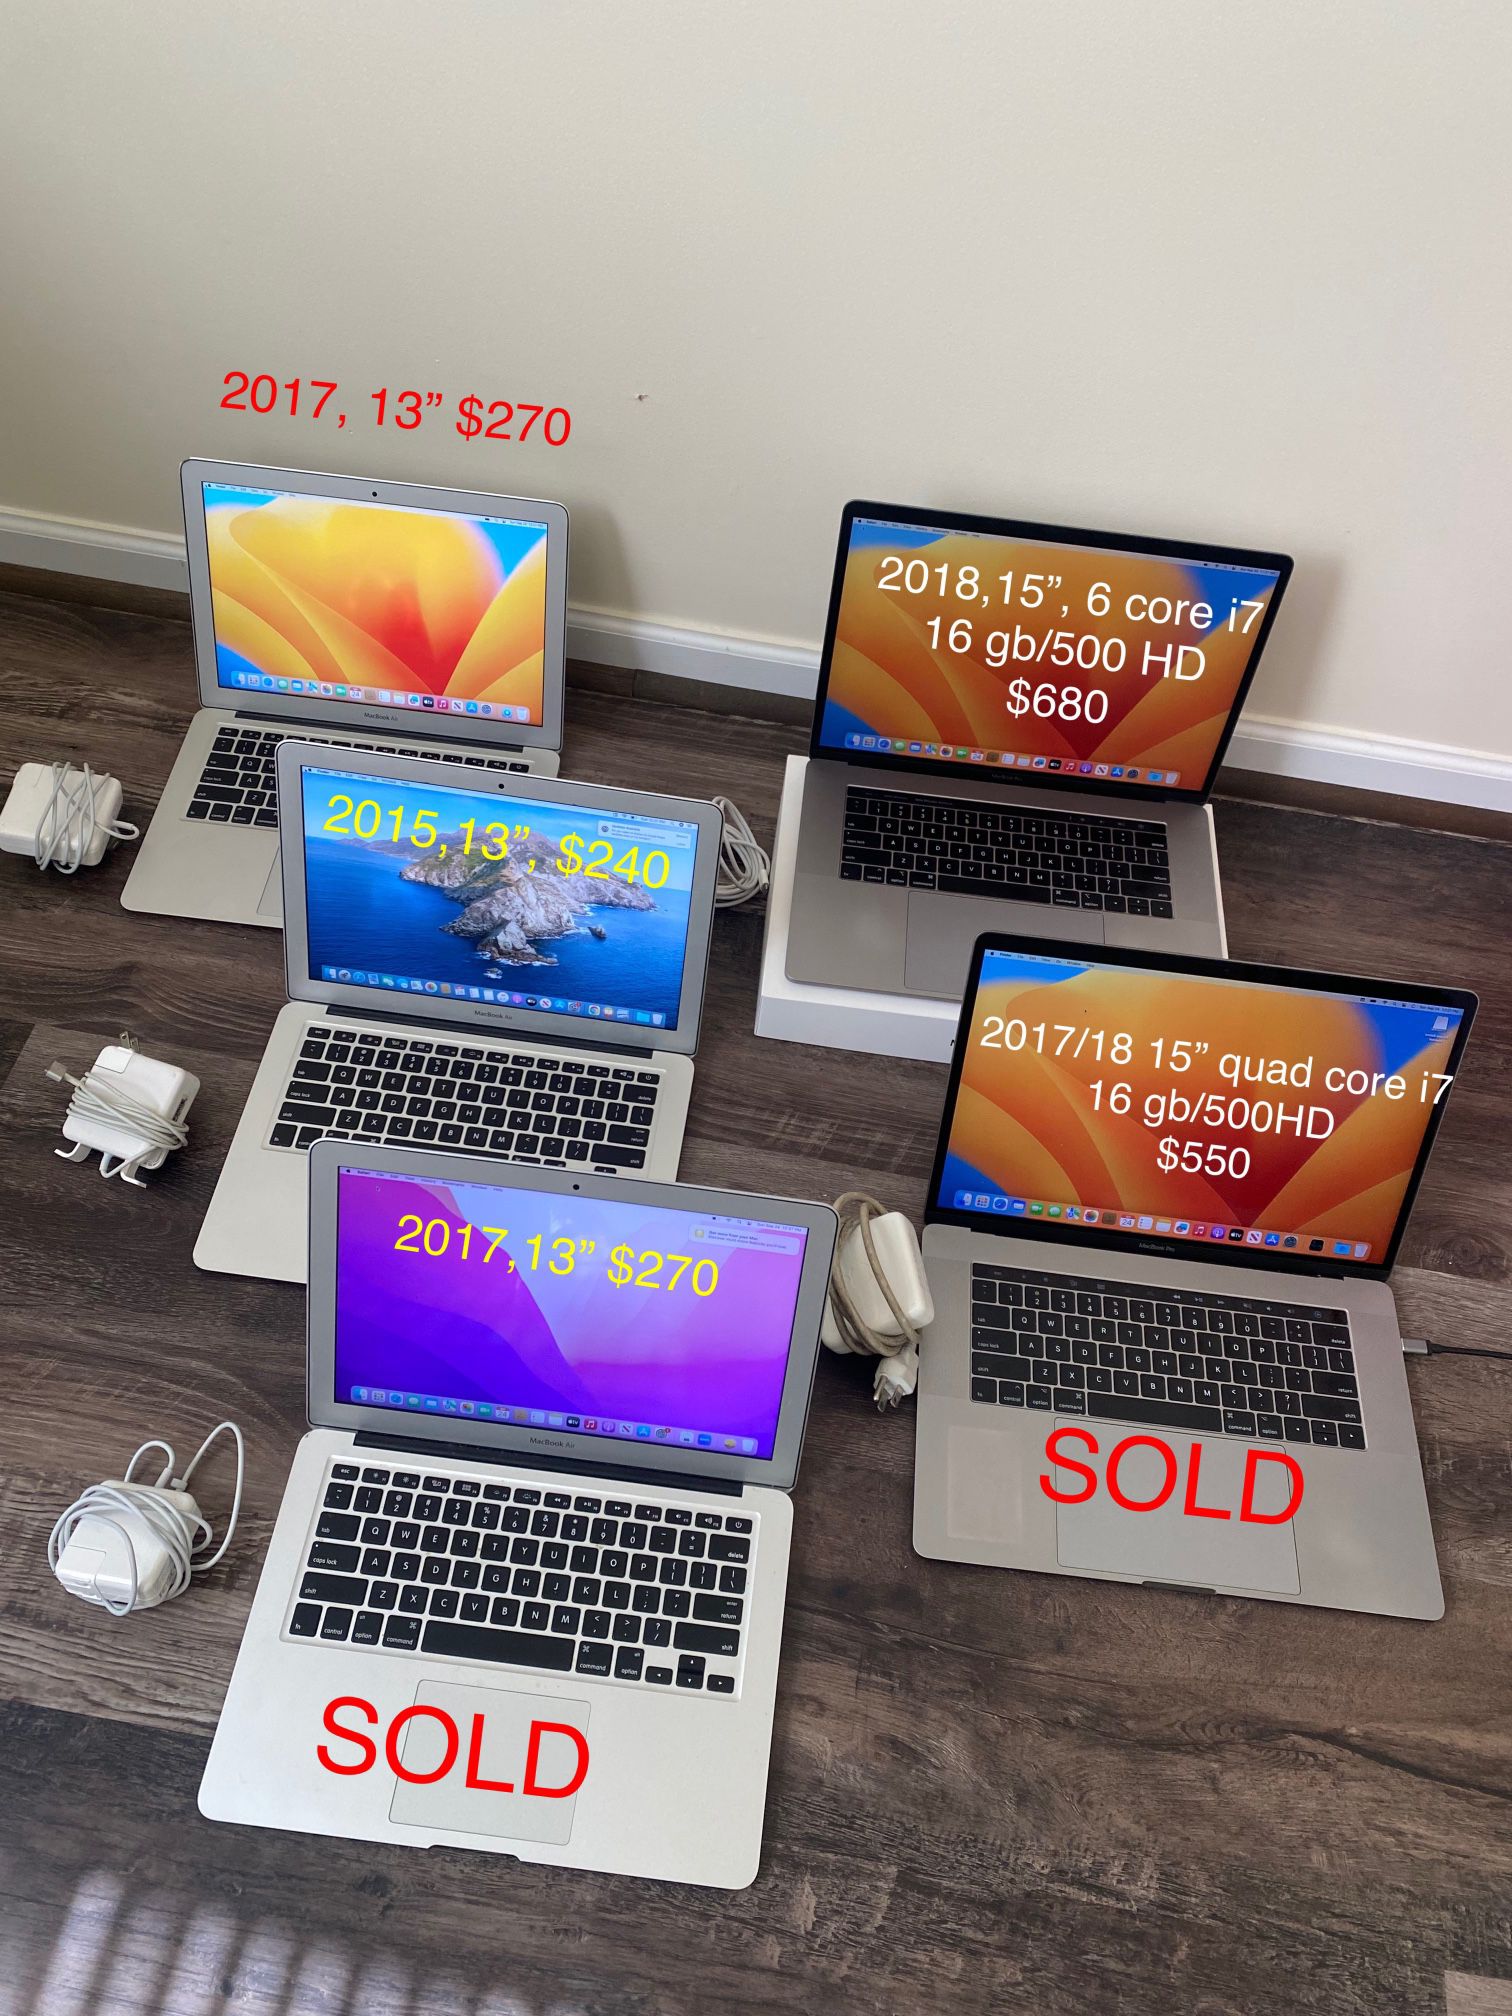 Macbook Pro 15/ Macbook Air 13” For Sale